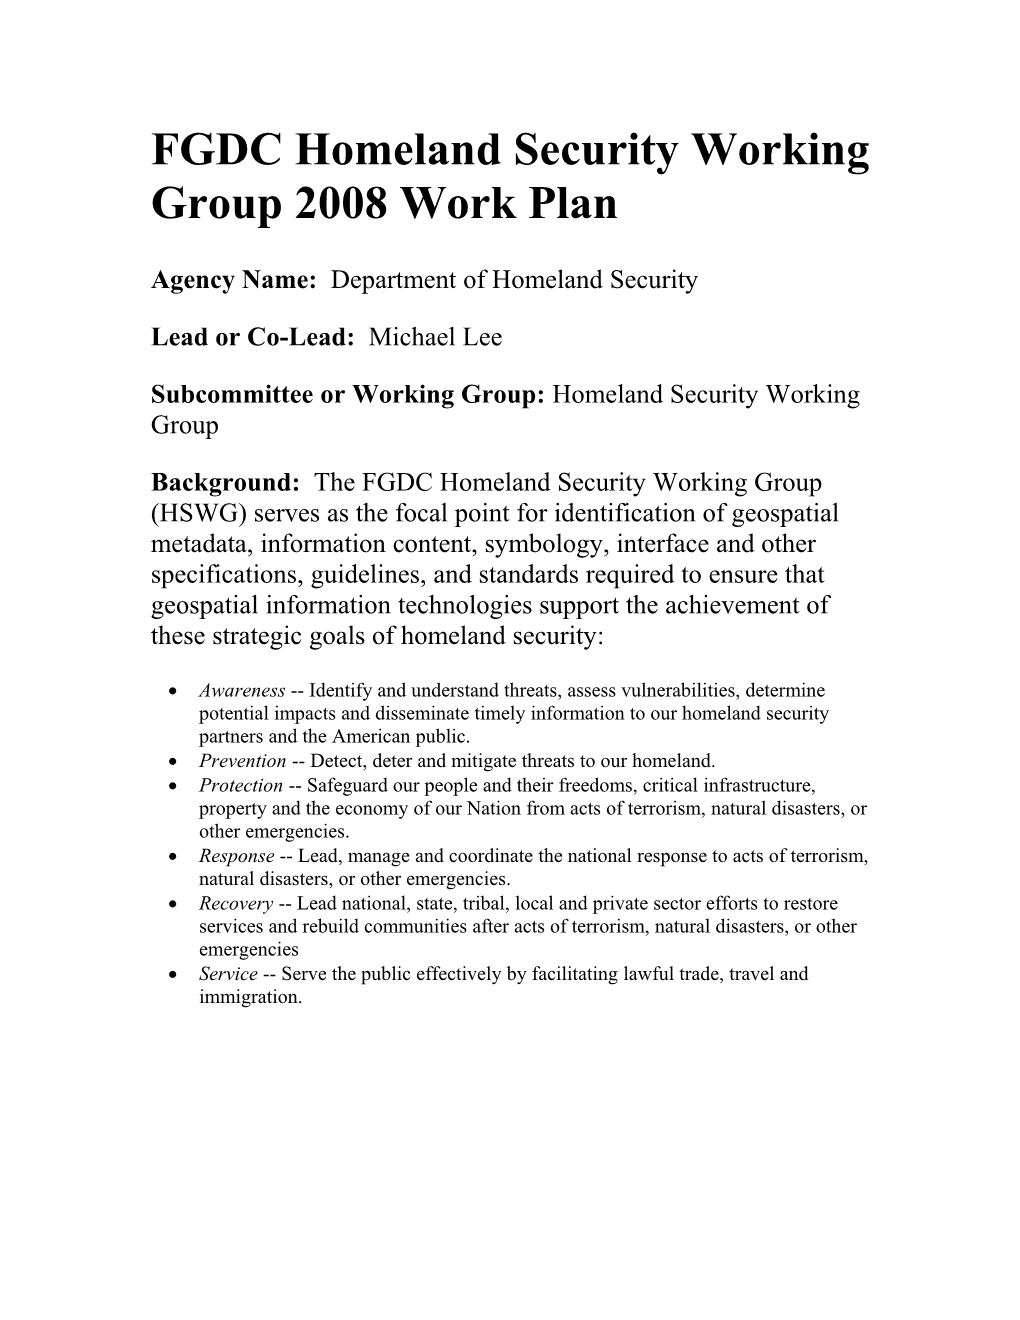 FGDC Homeland Security Working Group 2008 Work Plan